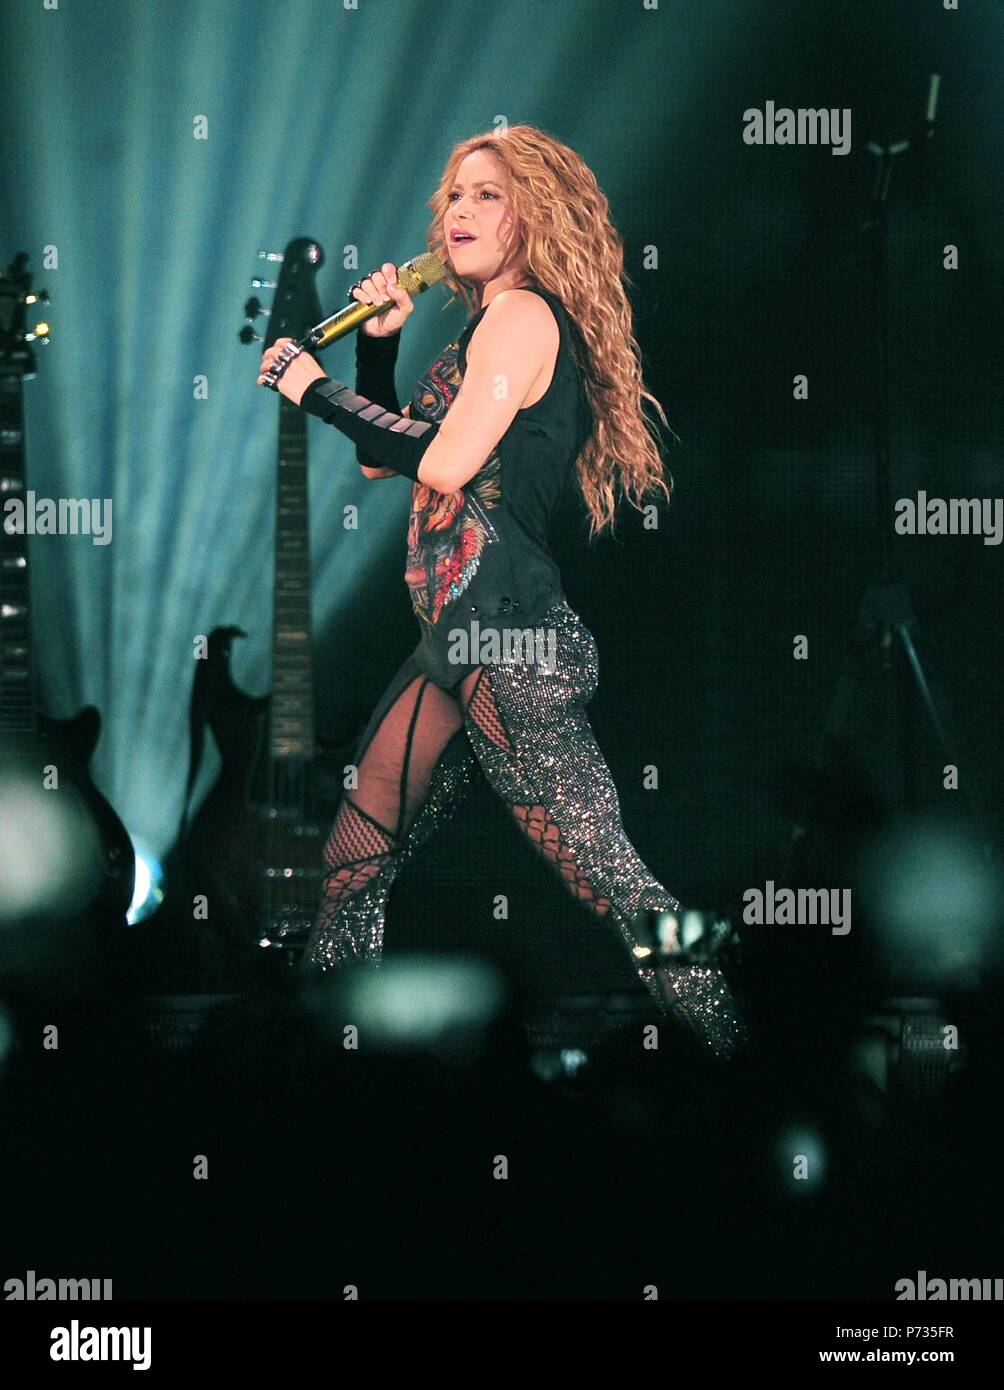 SHAKIRA, ENCANTADA DE REENCONTRARSE CON SU Shakira Mebarak Ripoll PUBLICO  MADRILENO ; 03/07/2018 03 juillet Madrid, Espagne - La chanteuse  Colombienne Shakira, ce soir lors de votre concert à Madrid de l'El